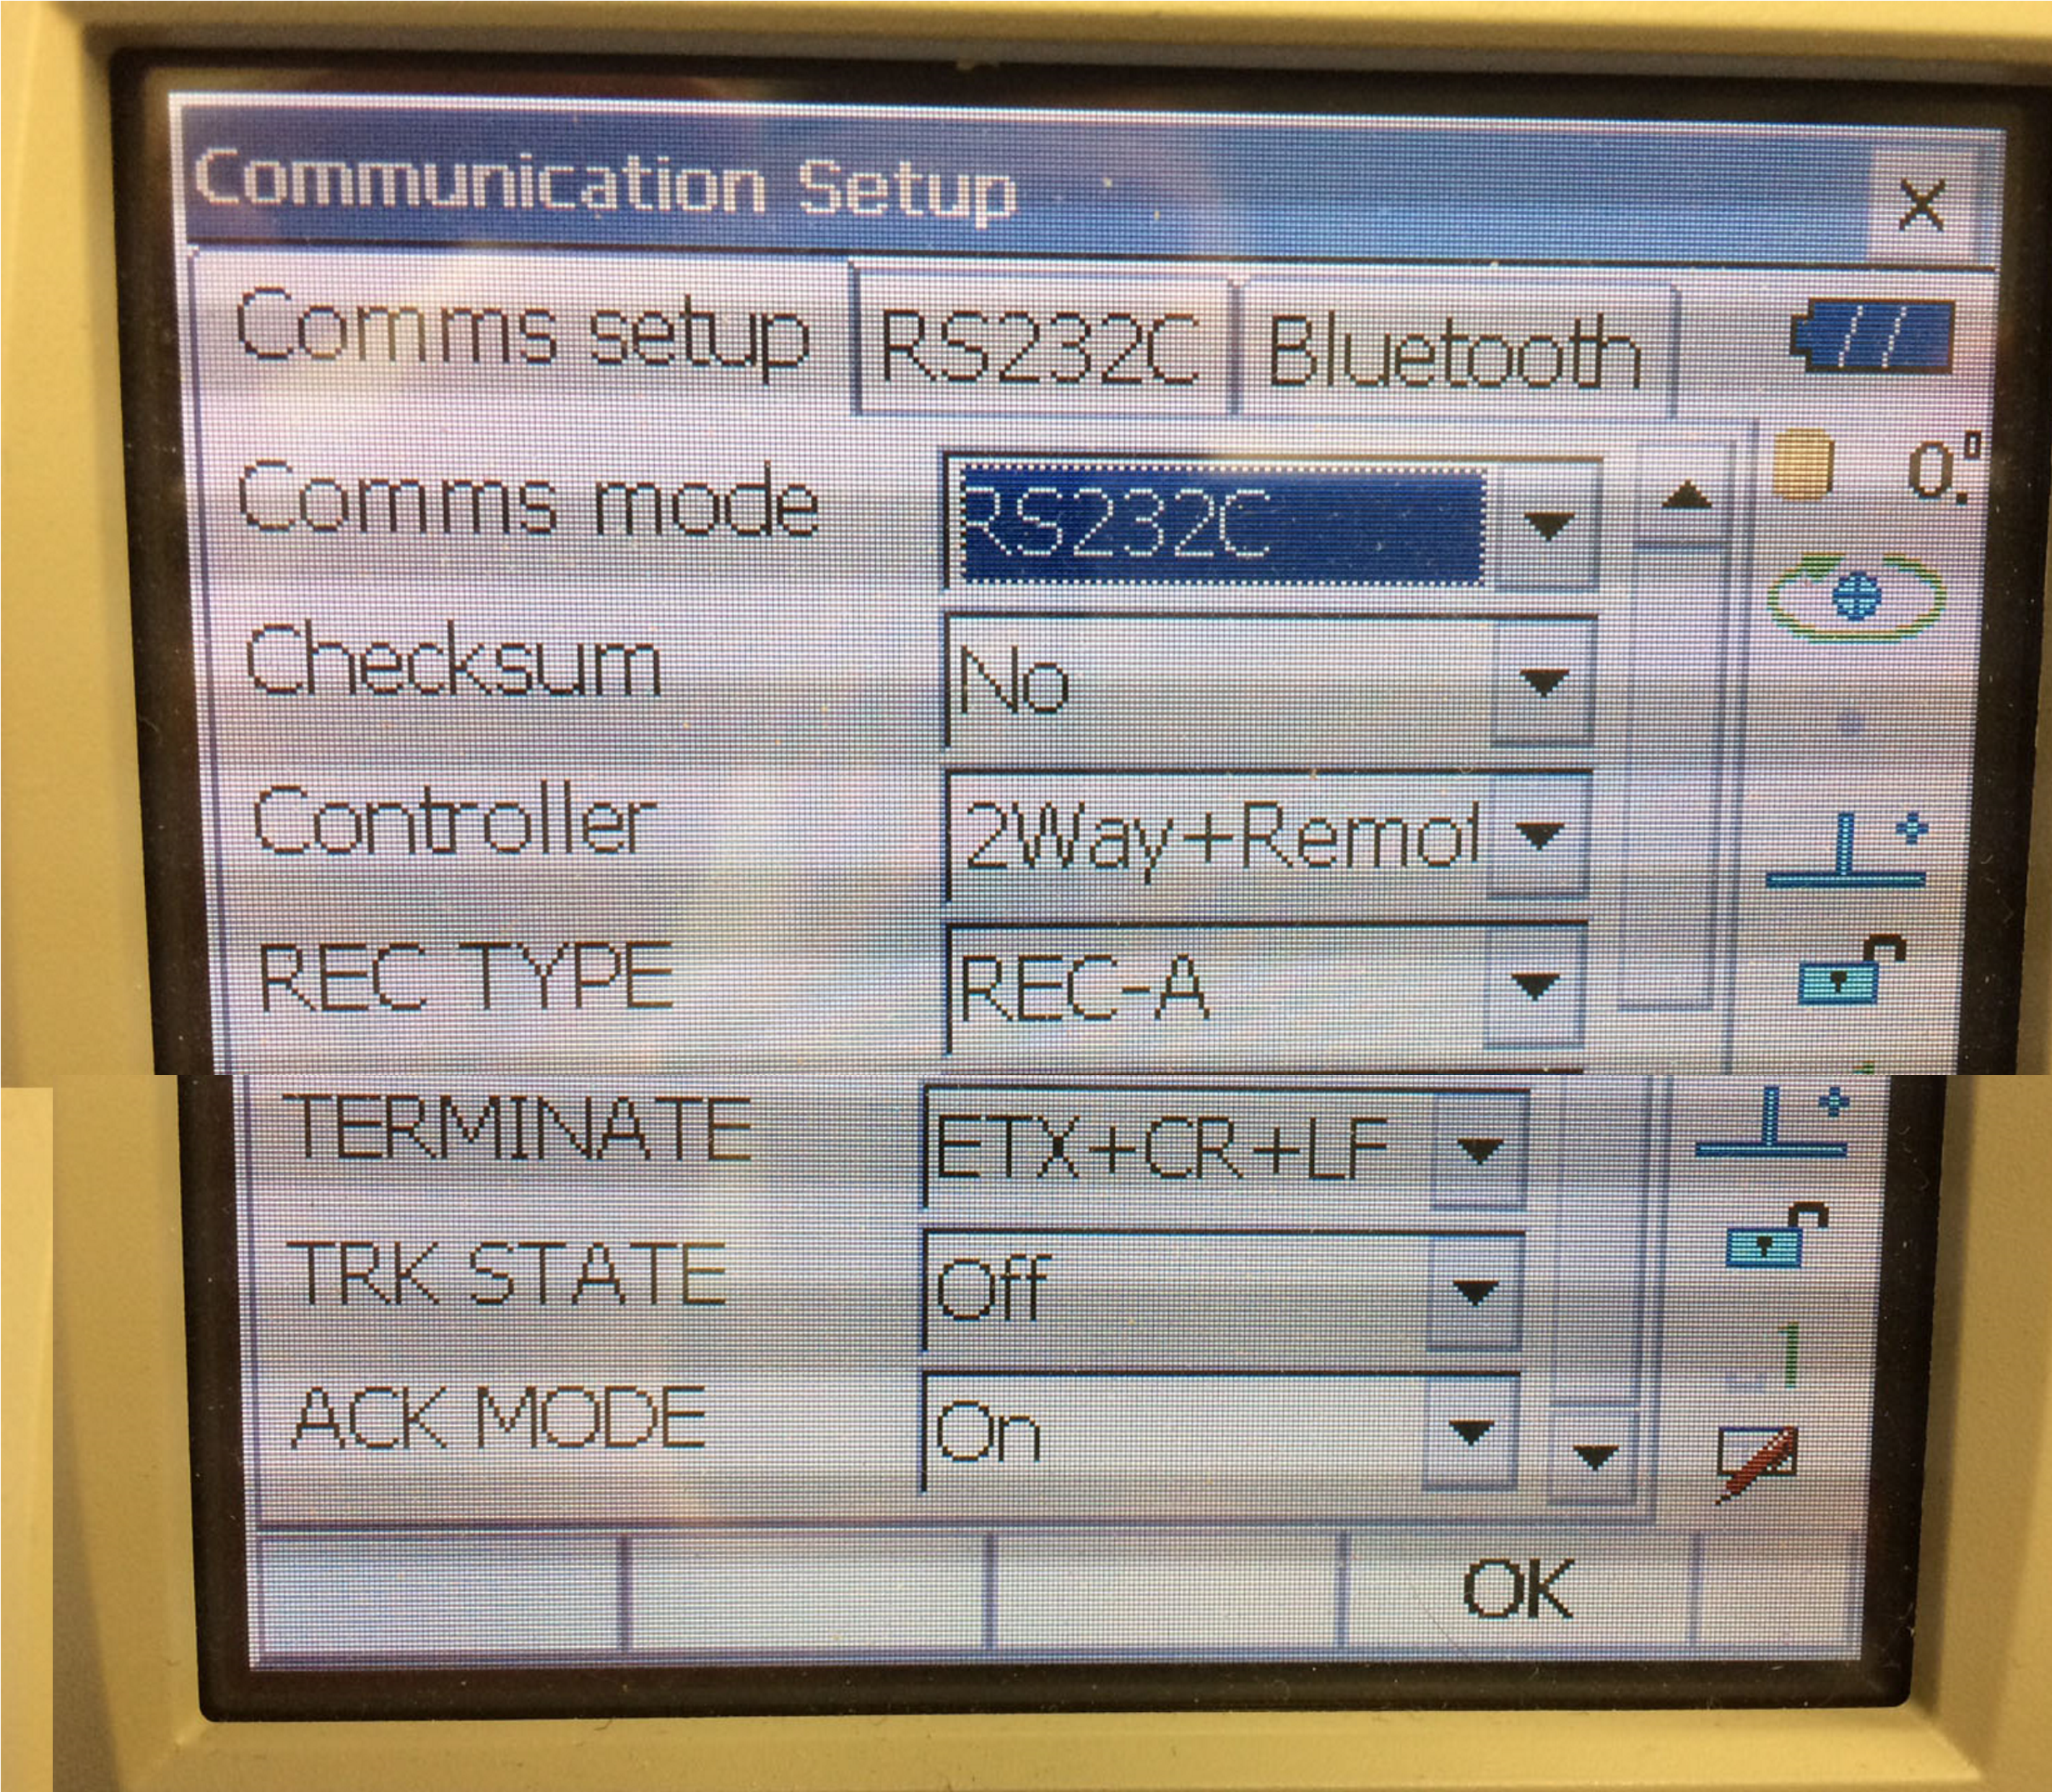 Machine generated alternative text:
Communication Setup 
Comms setup RS232C Bluetootl 
Checksum 
Confroller— 
No 
2W@/+RemoI 
RECTYPE— RE-GA 
afü 
ACICMODE 
an 
OK 